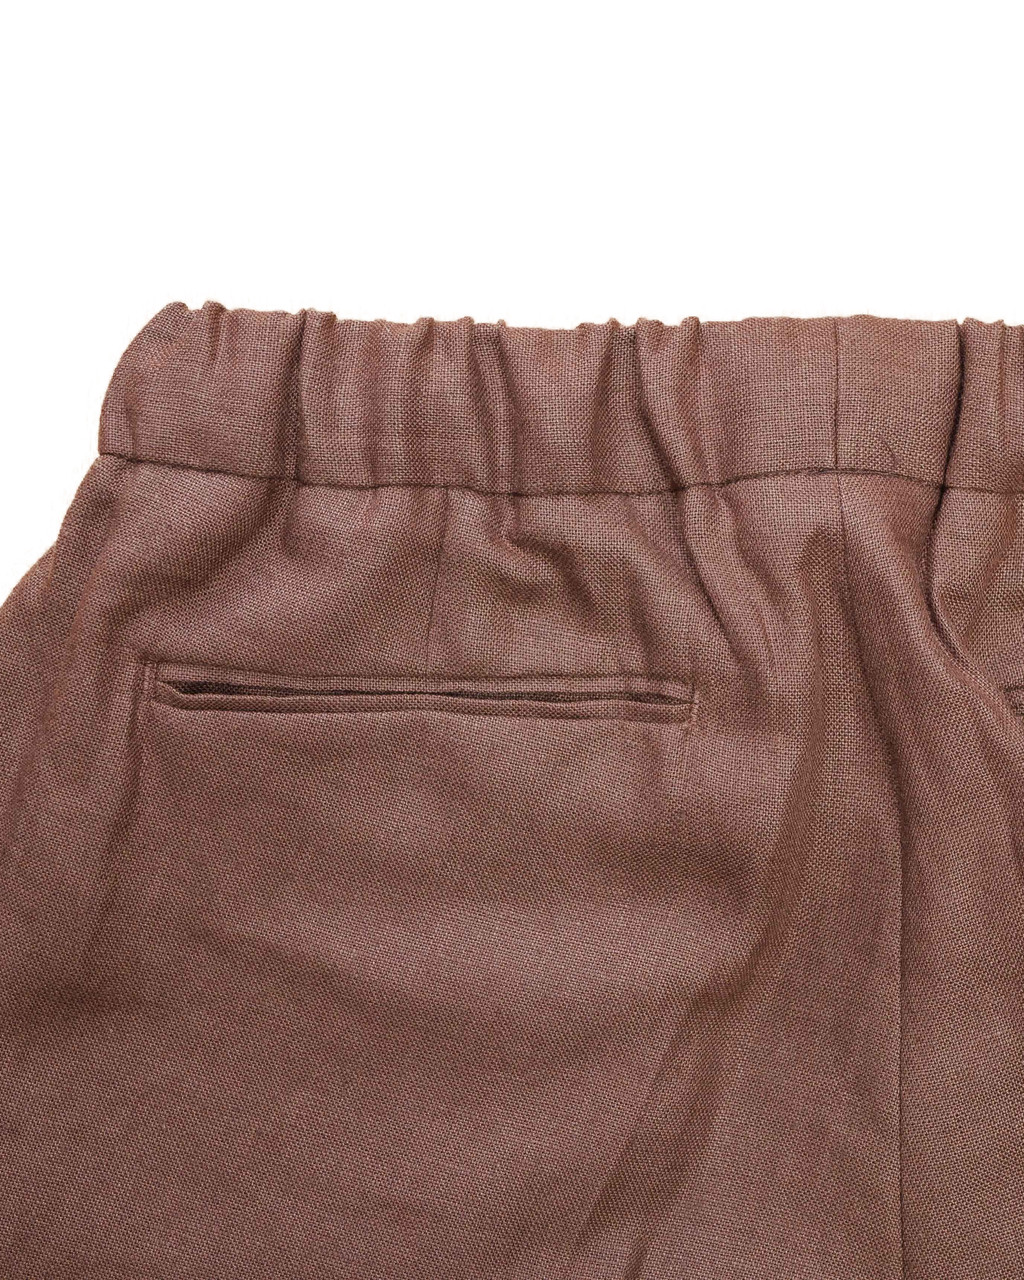 Regular Fit Linen trousers - Light beige - Men | H&M IN